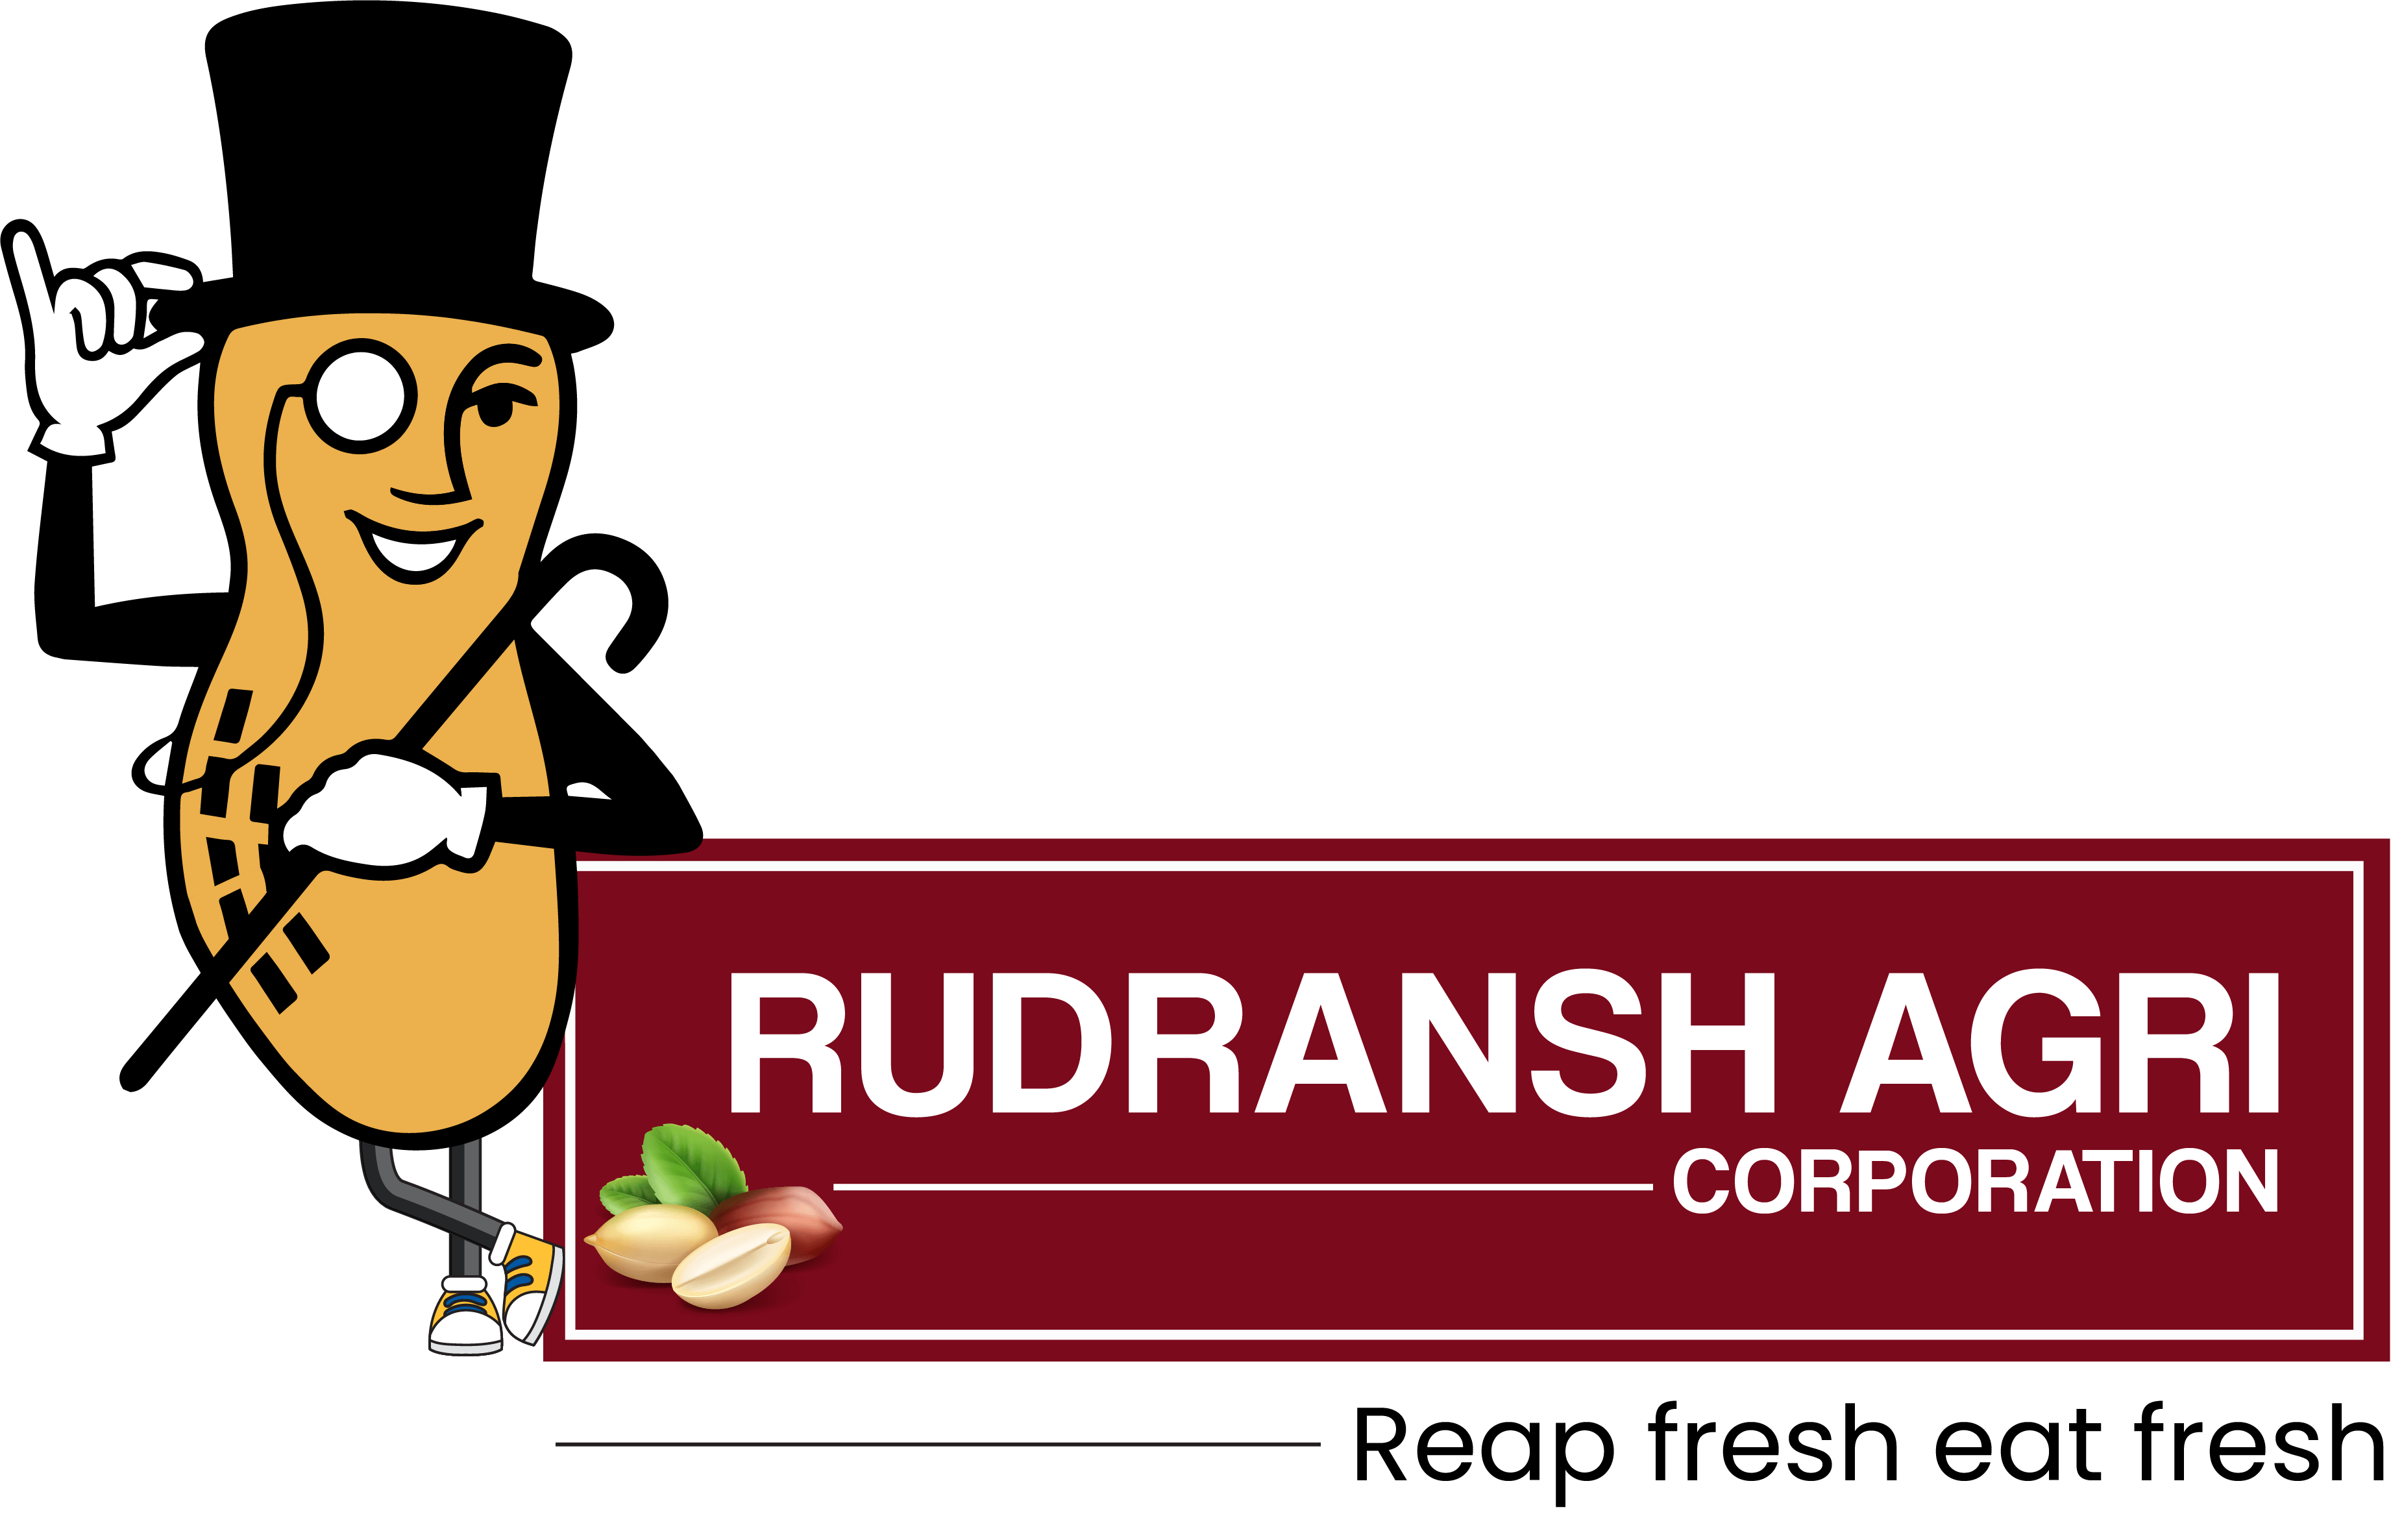 Rudransh Agri Corporation